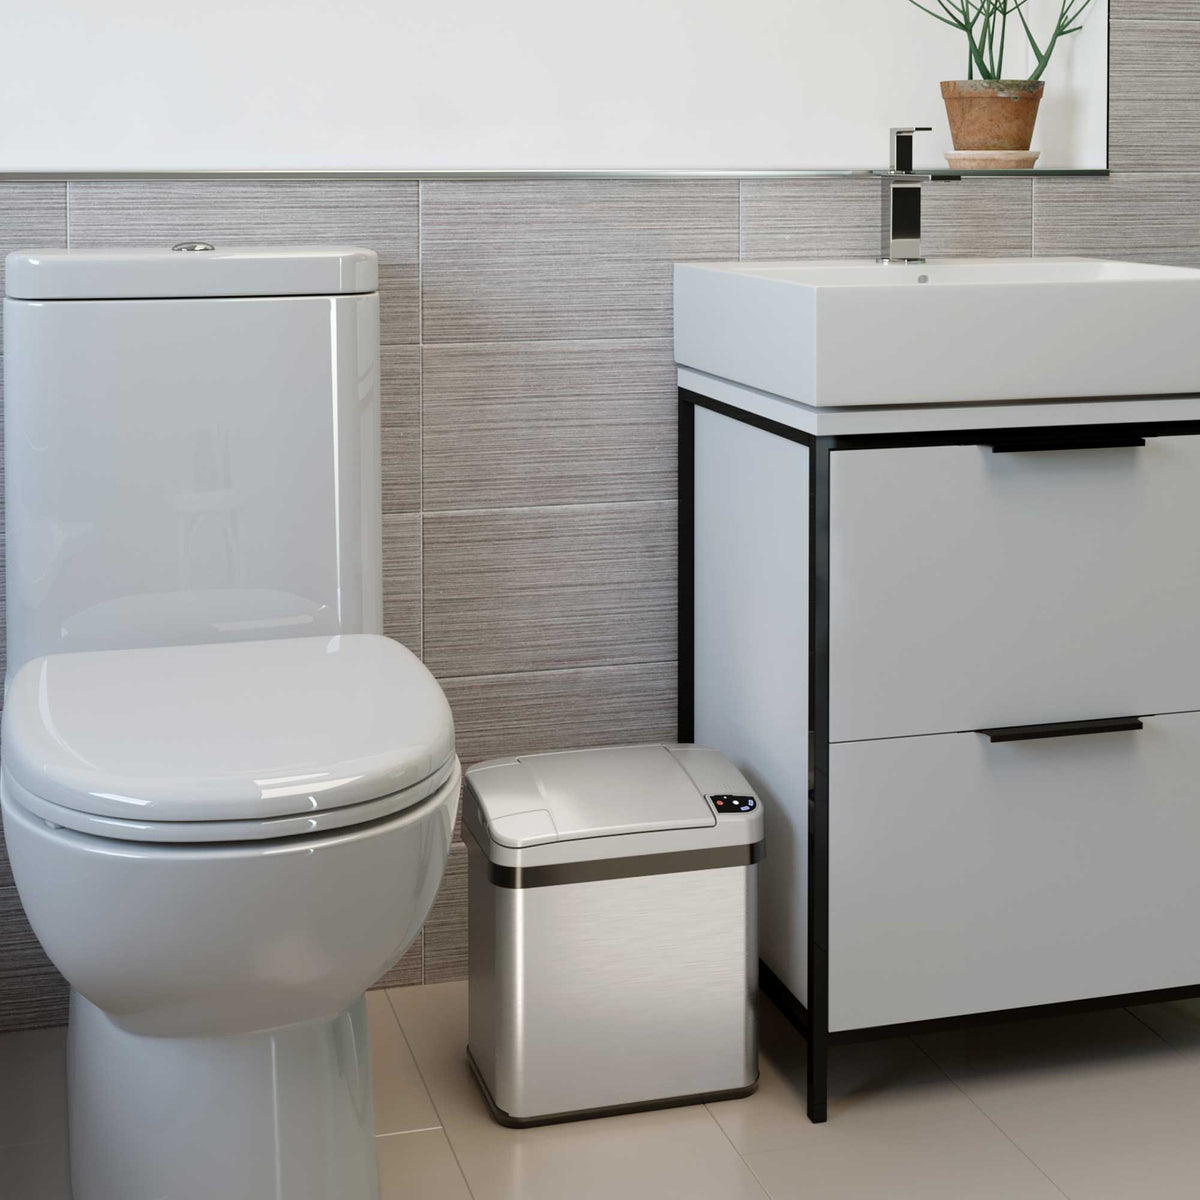 2.5 Gallon / 9.5 Liter Stainless Steel Sensor Bathroom Trash Can (2-Pack) in bathroom